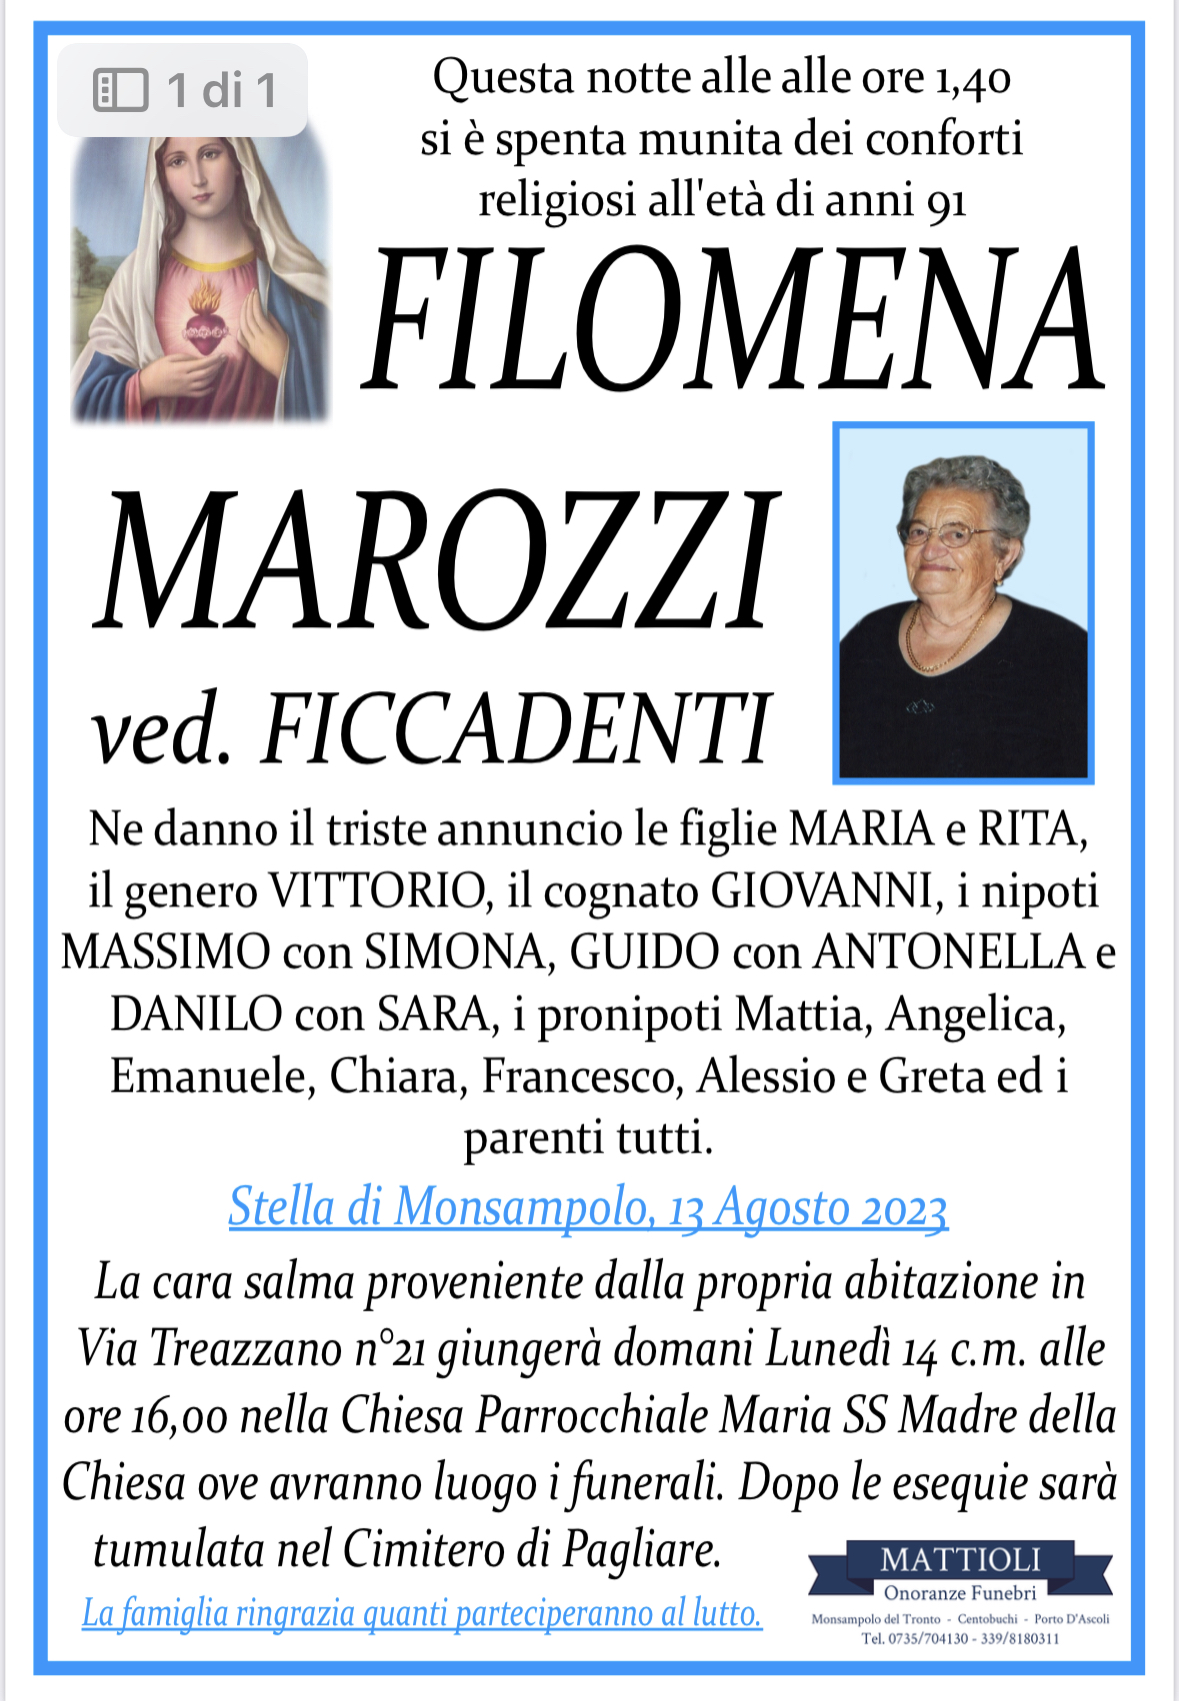 Filomena Marozzi